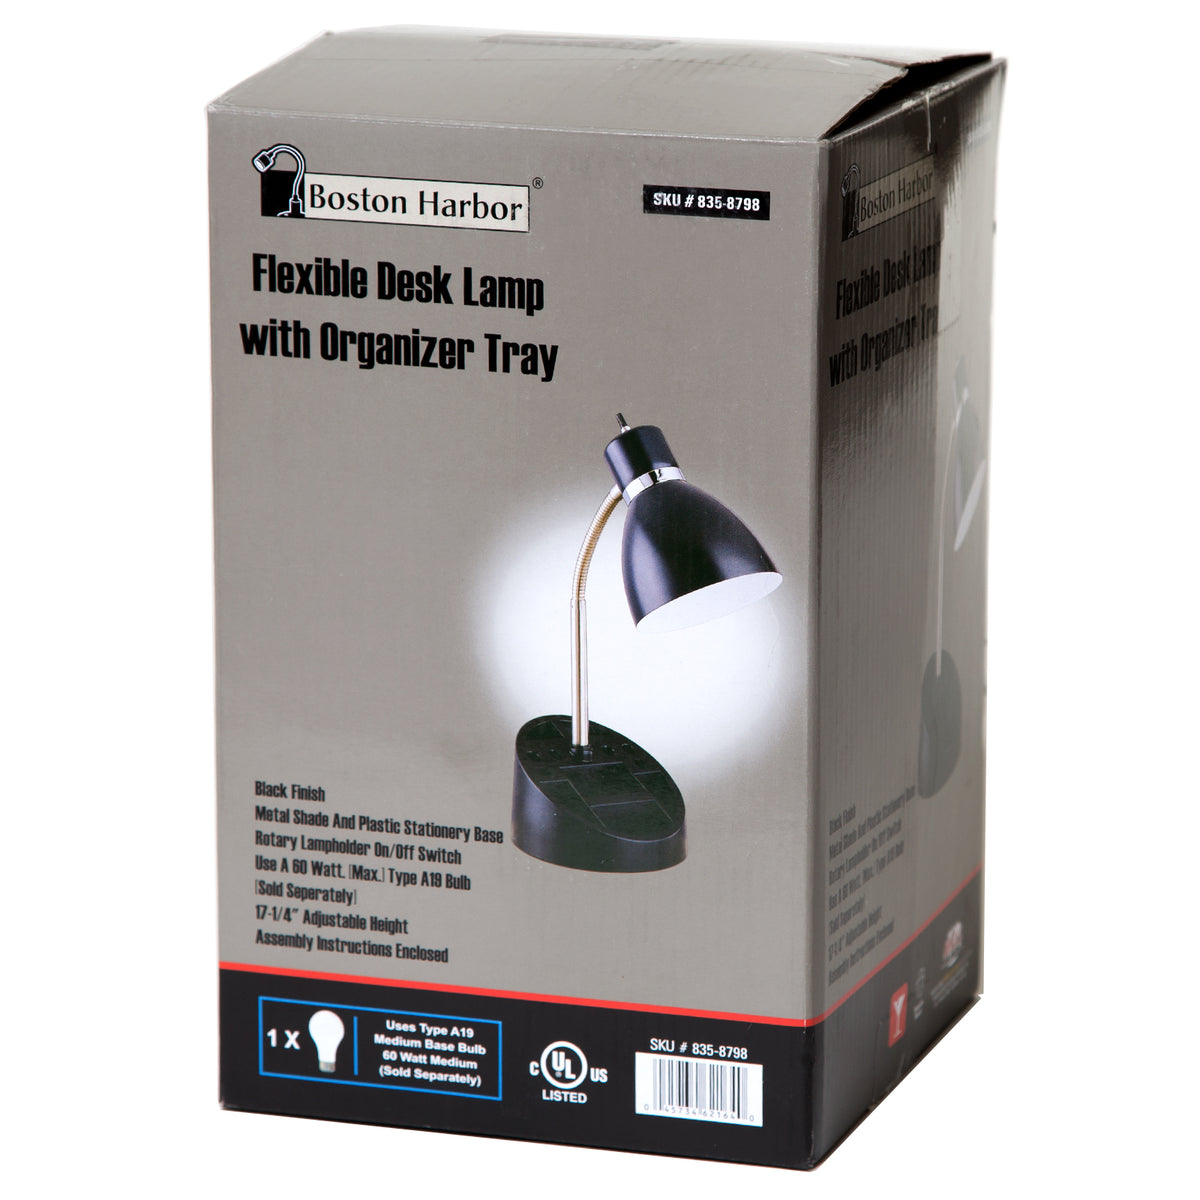 buy desk lamps at cheap rate in bulk. wholesale & retail lighting equipments store. home décor ideas, maintenance, repair replacement parts